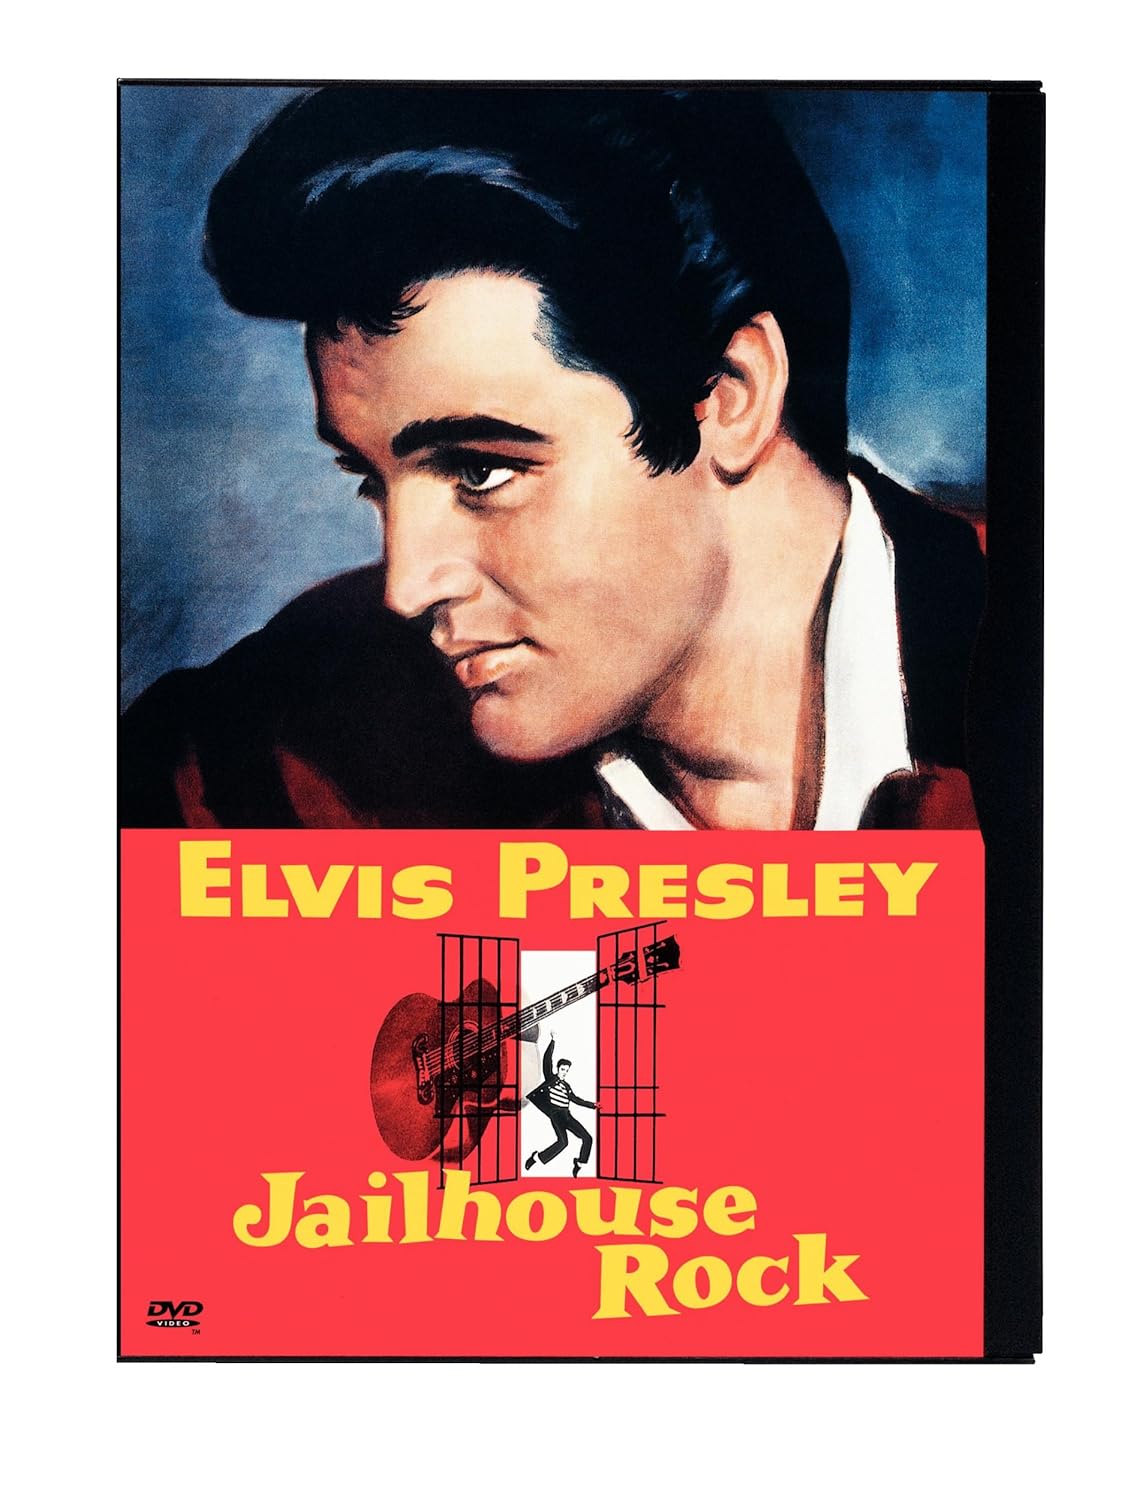 Elvis Presley's Jailhouse Rock A Cultural Phenomenon